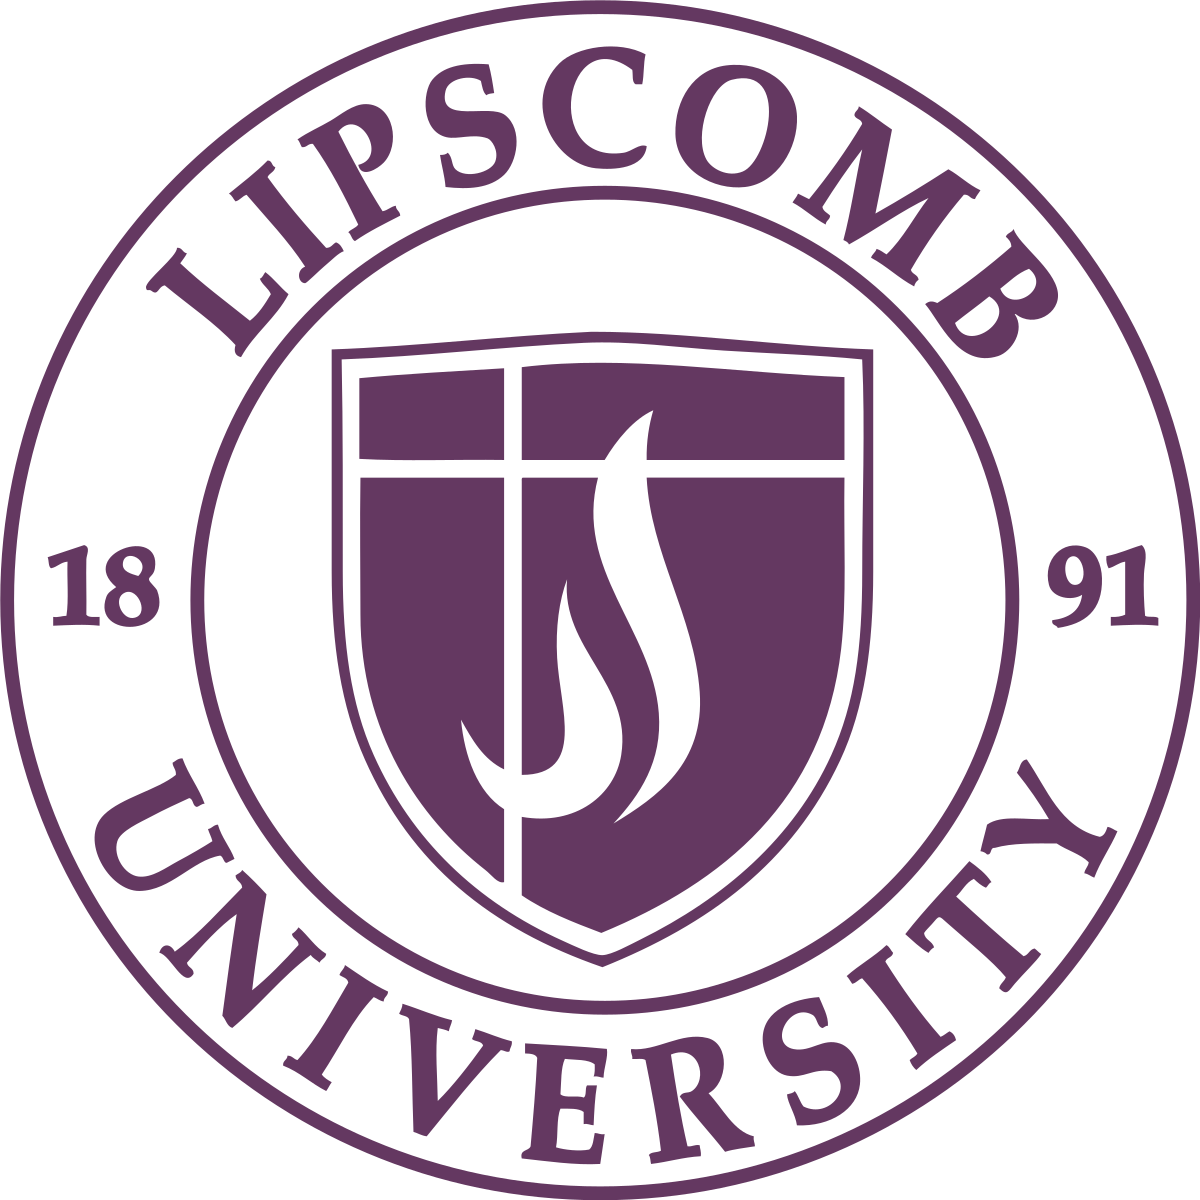 Logo of Lipscomb University